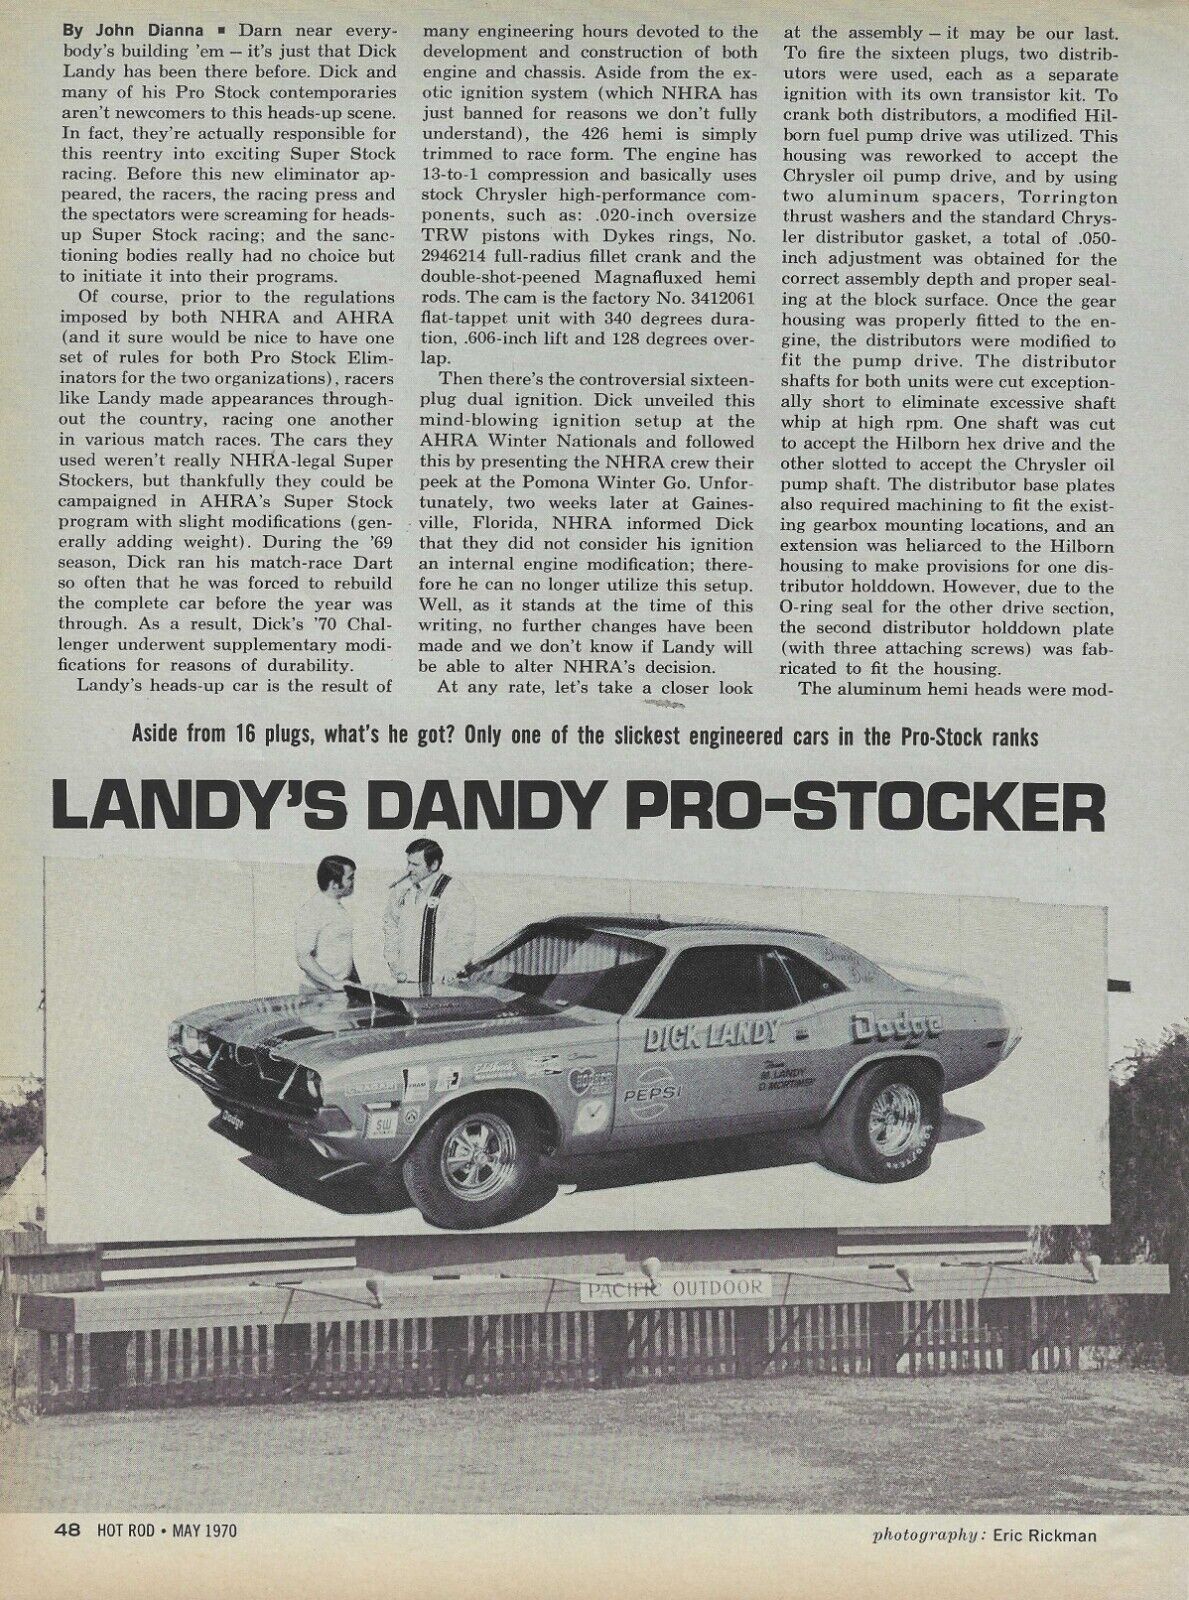 1970 Dick Landy Dodge Challenger Pro Stock Dragster Vintage Magazine Article Ad